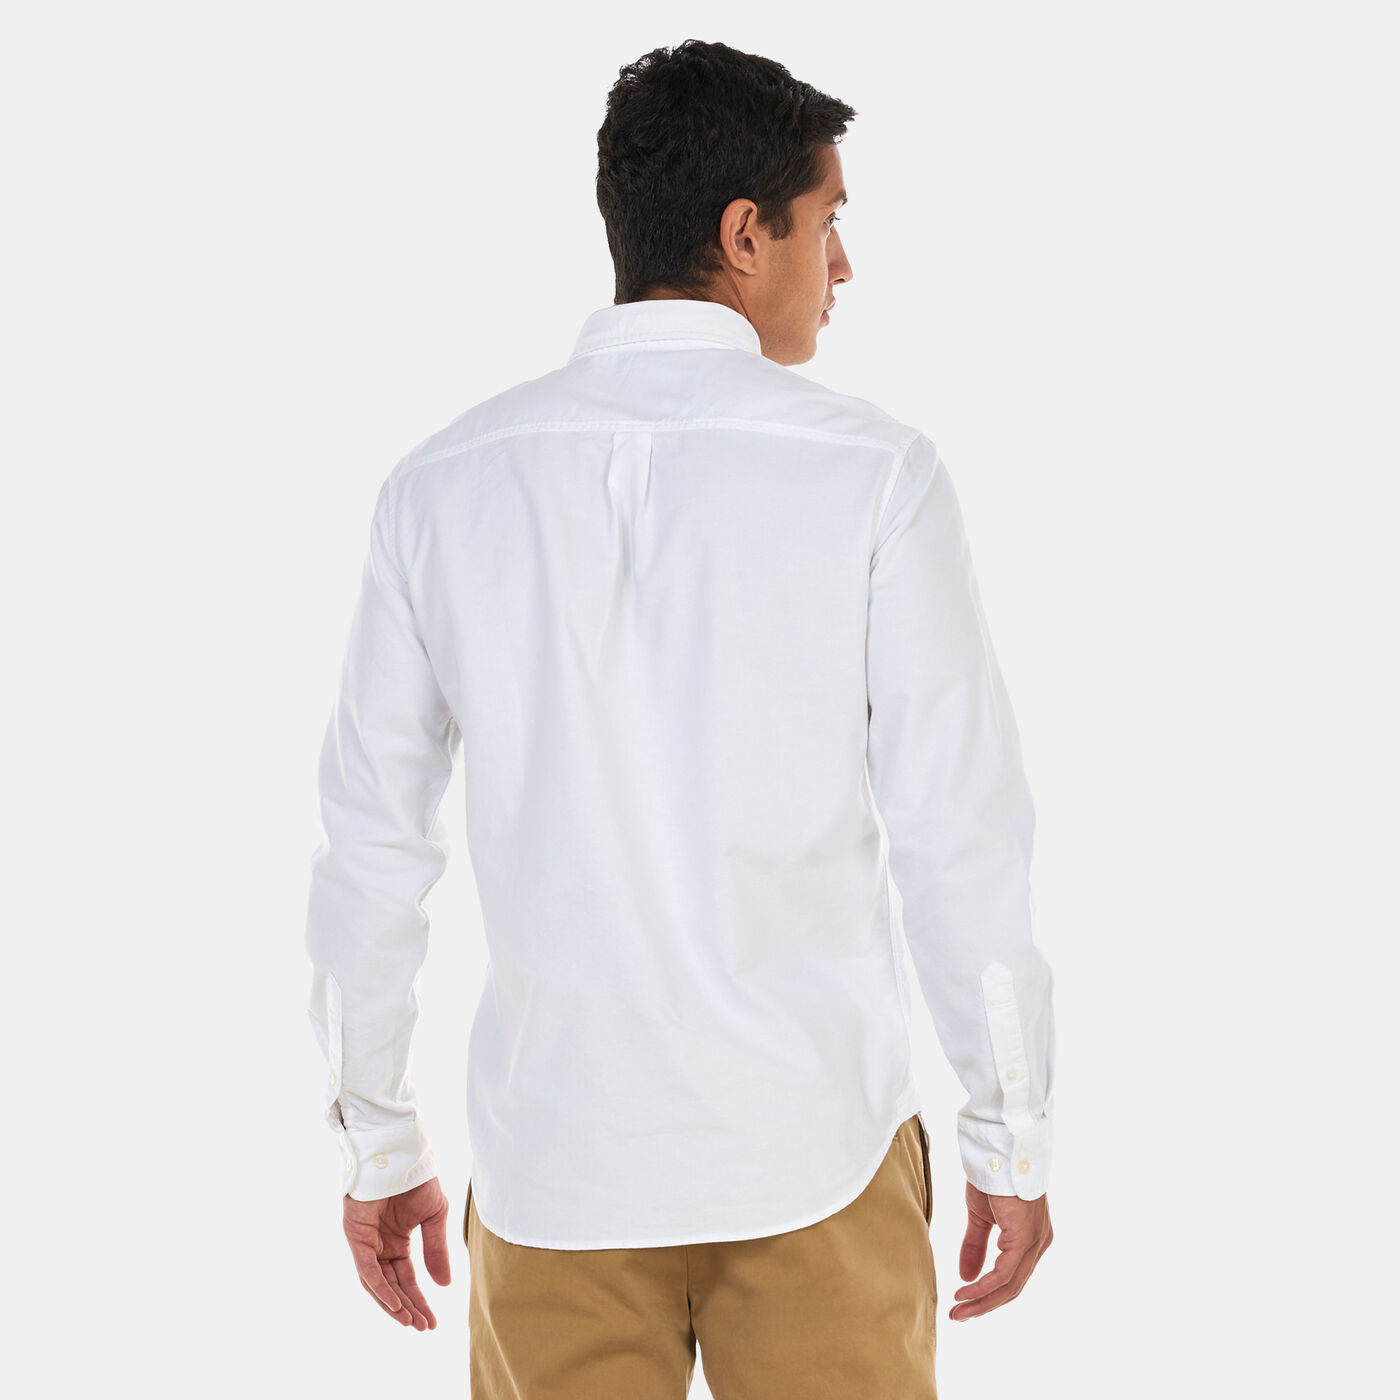 Men's Oxford Long-Sleeve Shirt